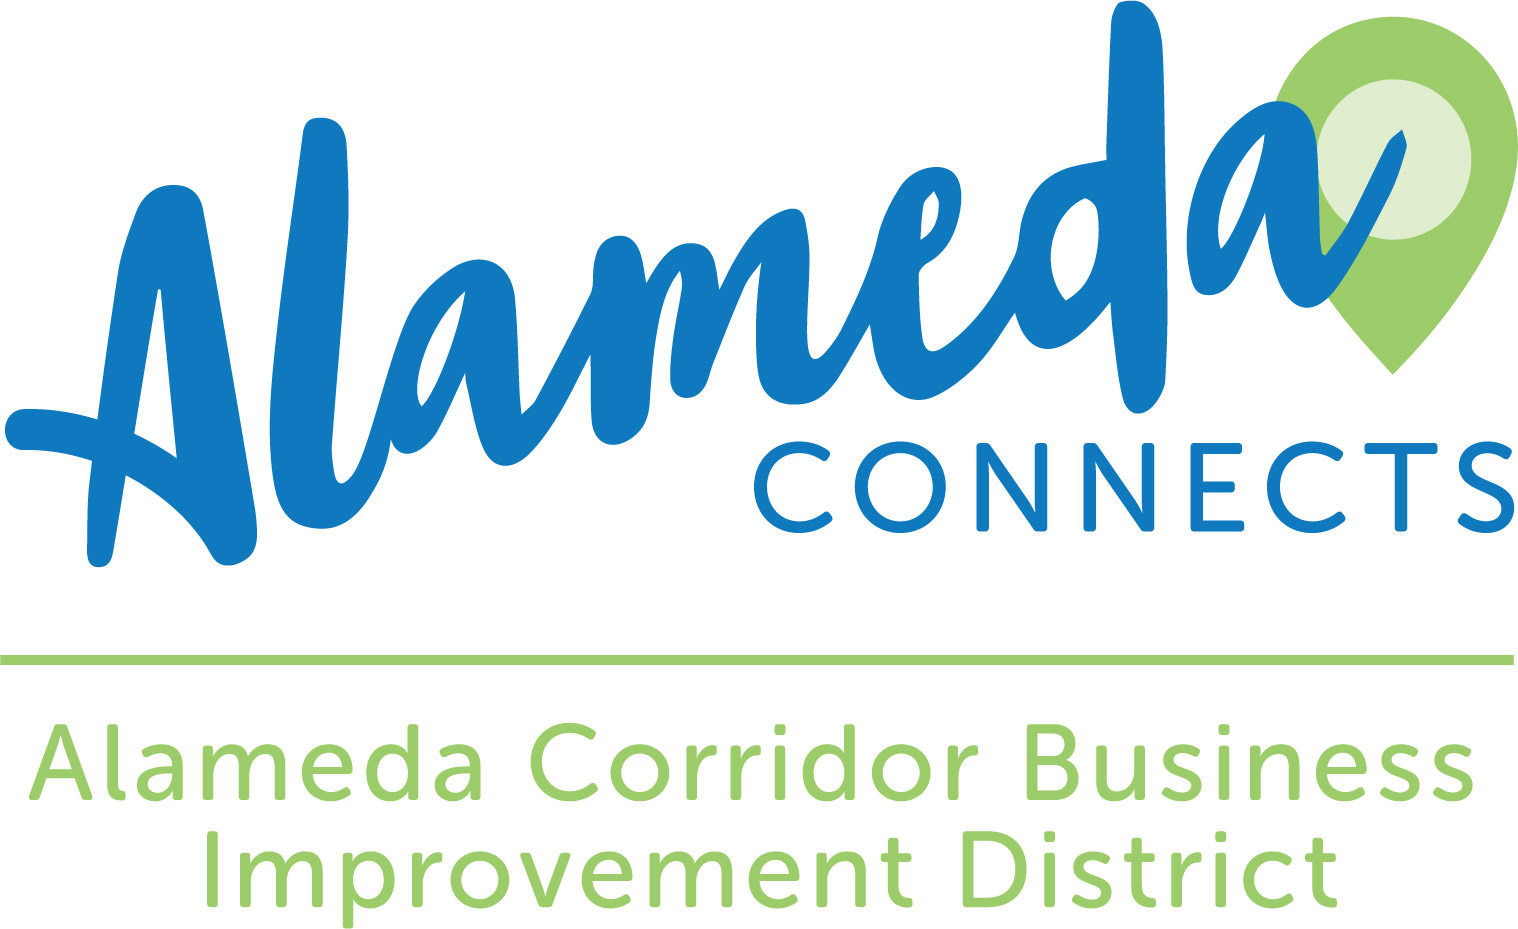 Alameda Corridor Business Improvement District/Alameda Connects